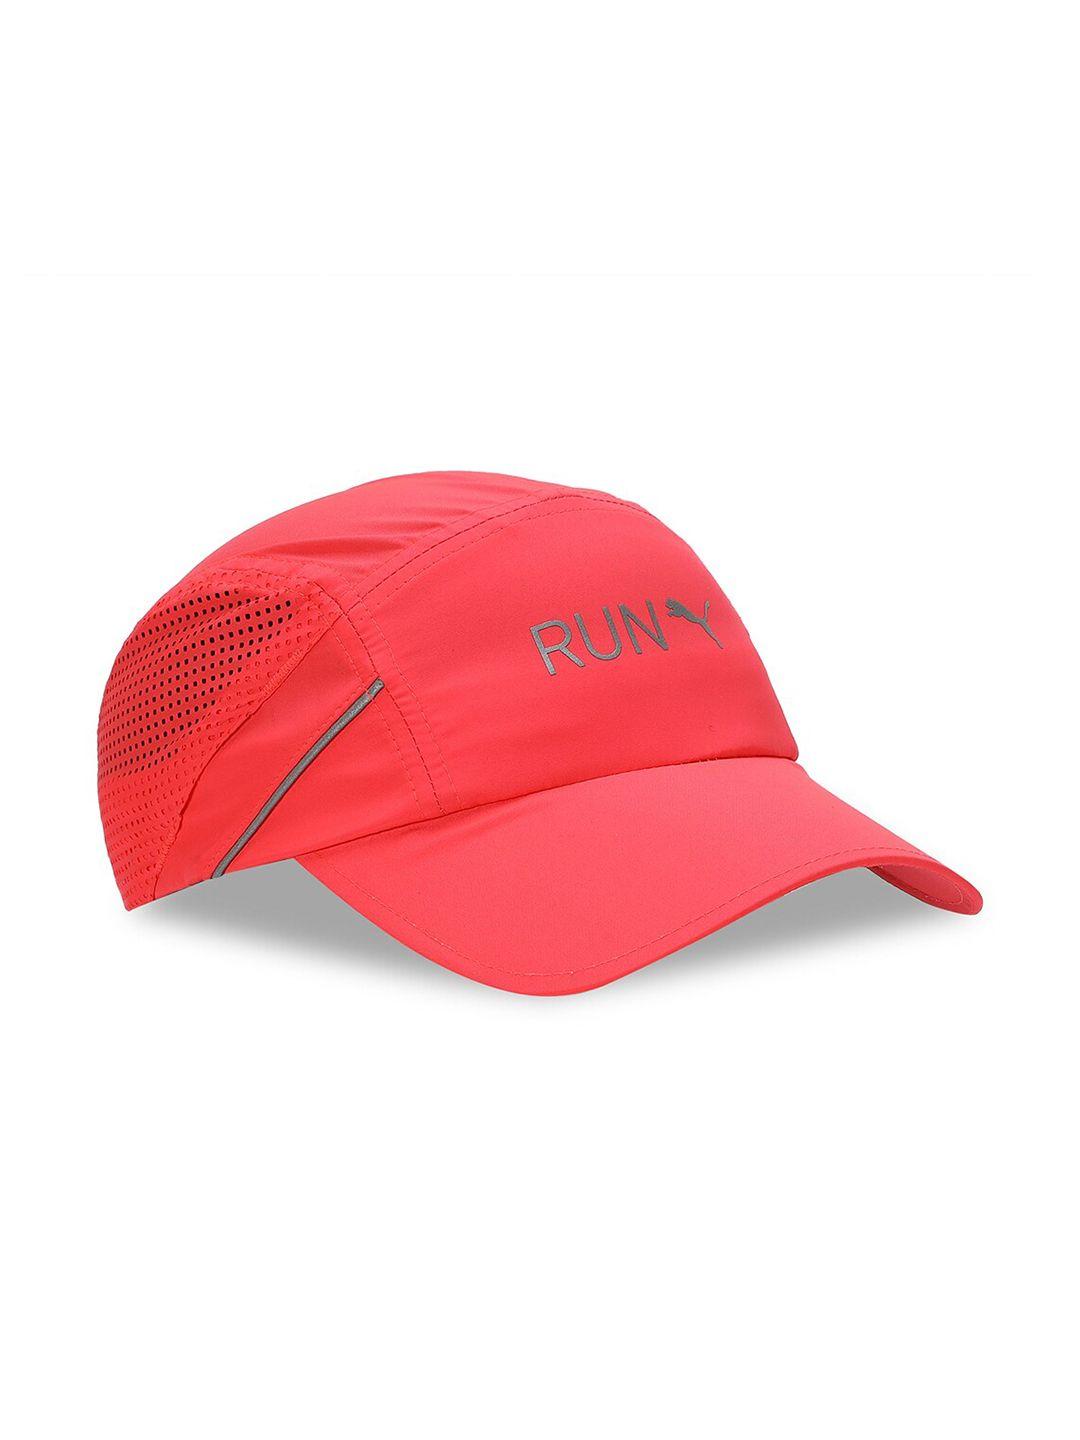 puma unisex lightweight running cap